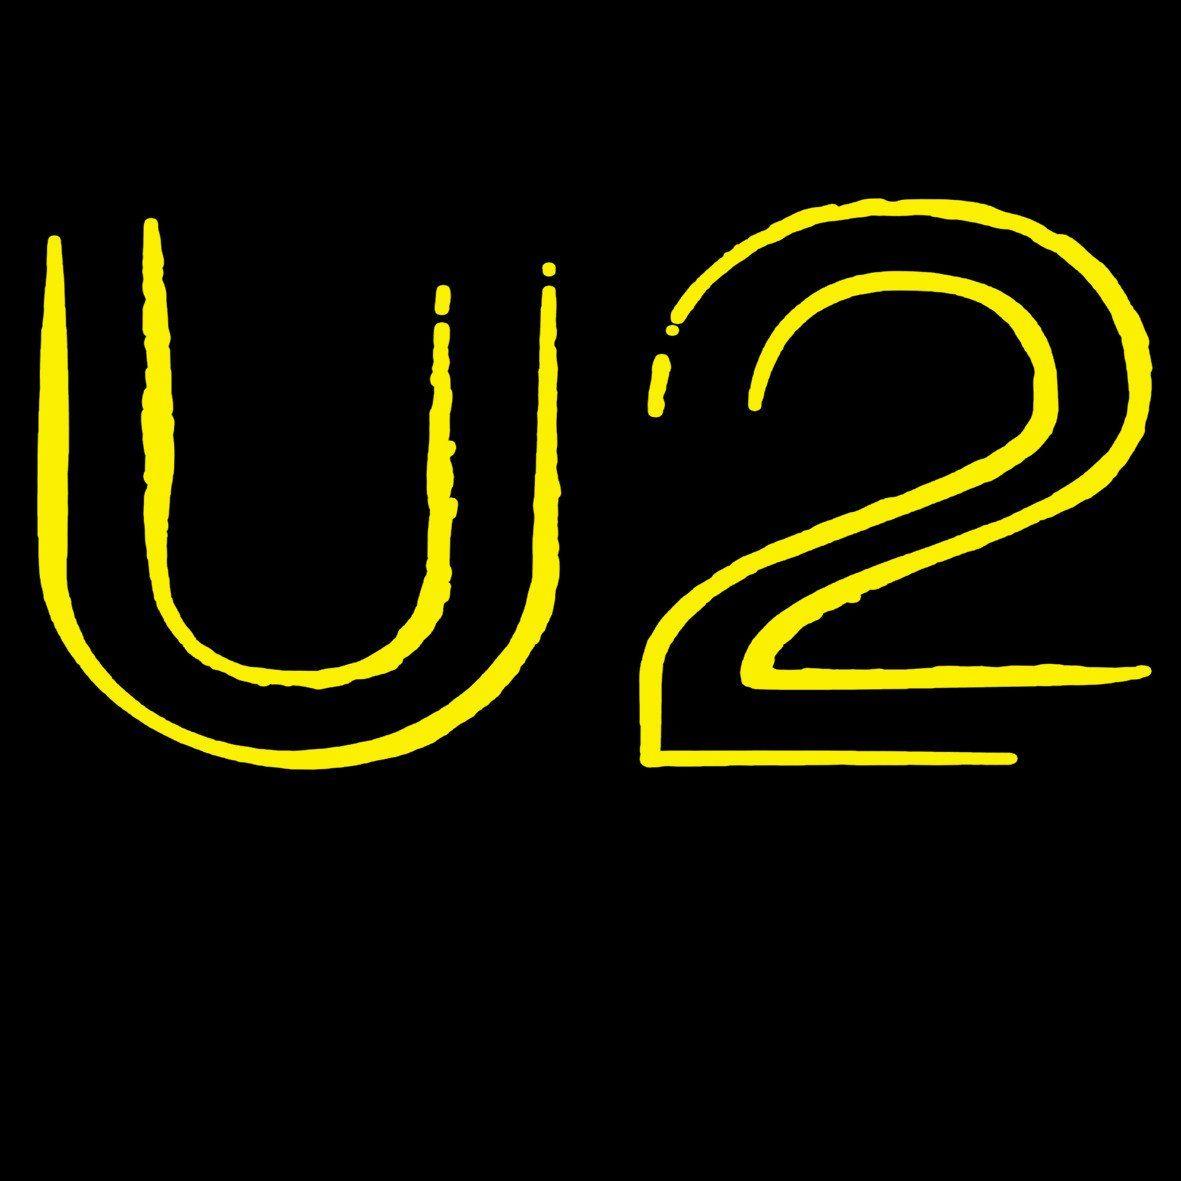 U2 Logo - U2 Logo 2015 – CENTRAL T-SHIRTS